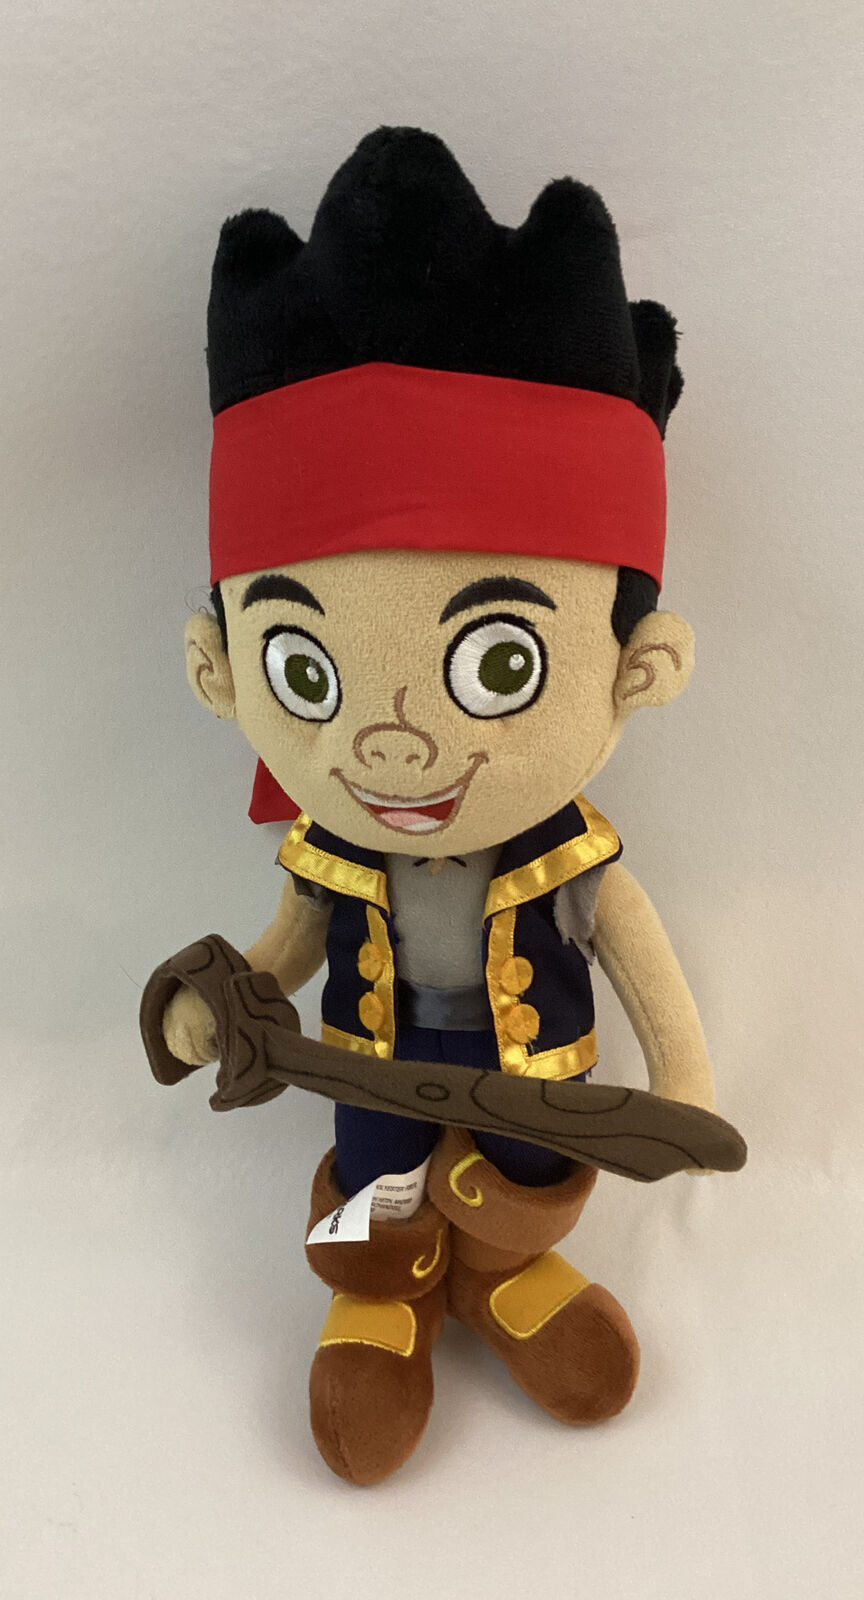 Jake and The Neverland Pirates 13” Disney Parks Original Plush Stuffed Doll Toy